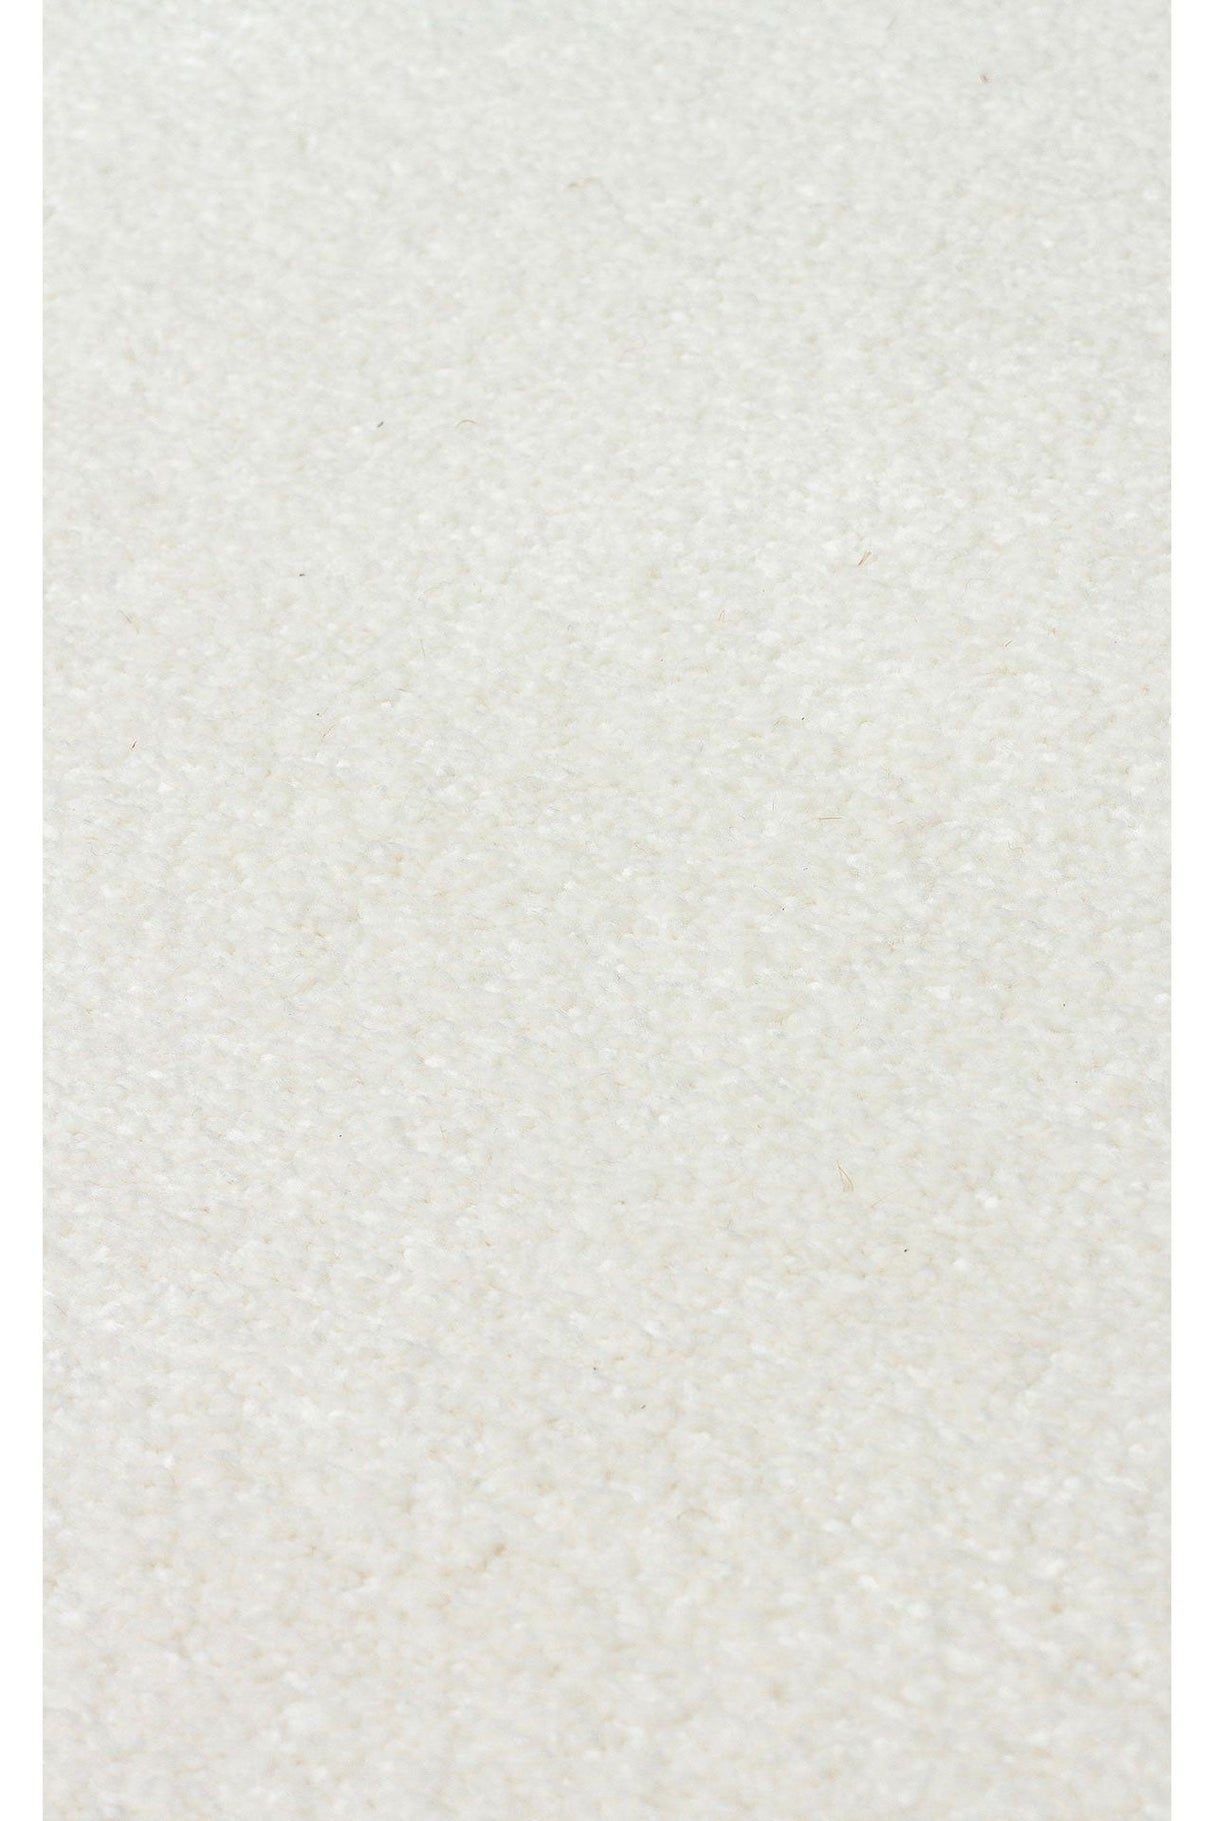 #Turkish_Carpets_Rugs# #Modern_Carpets# #Abrash_Carpets#Lt Plain White